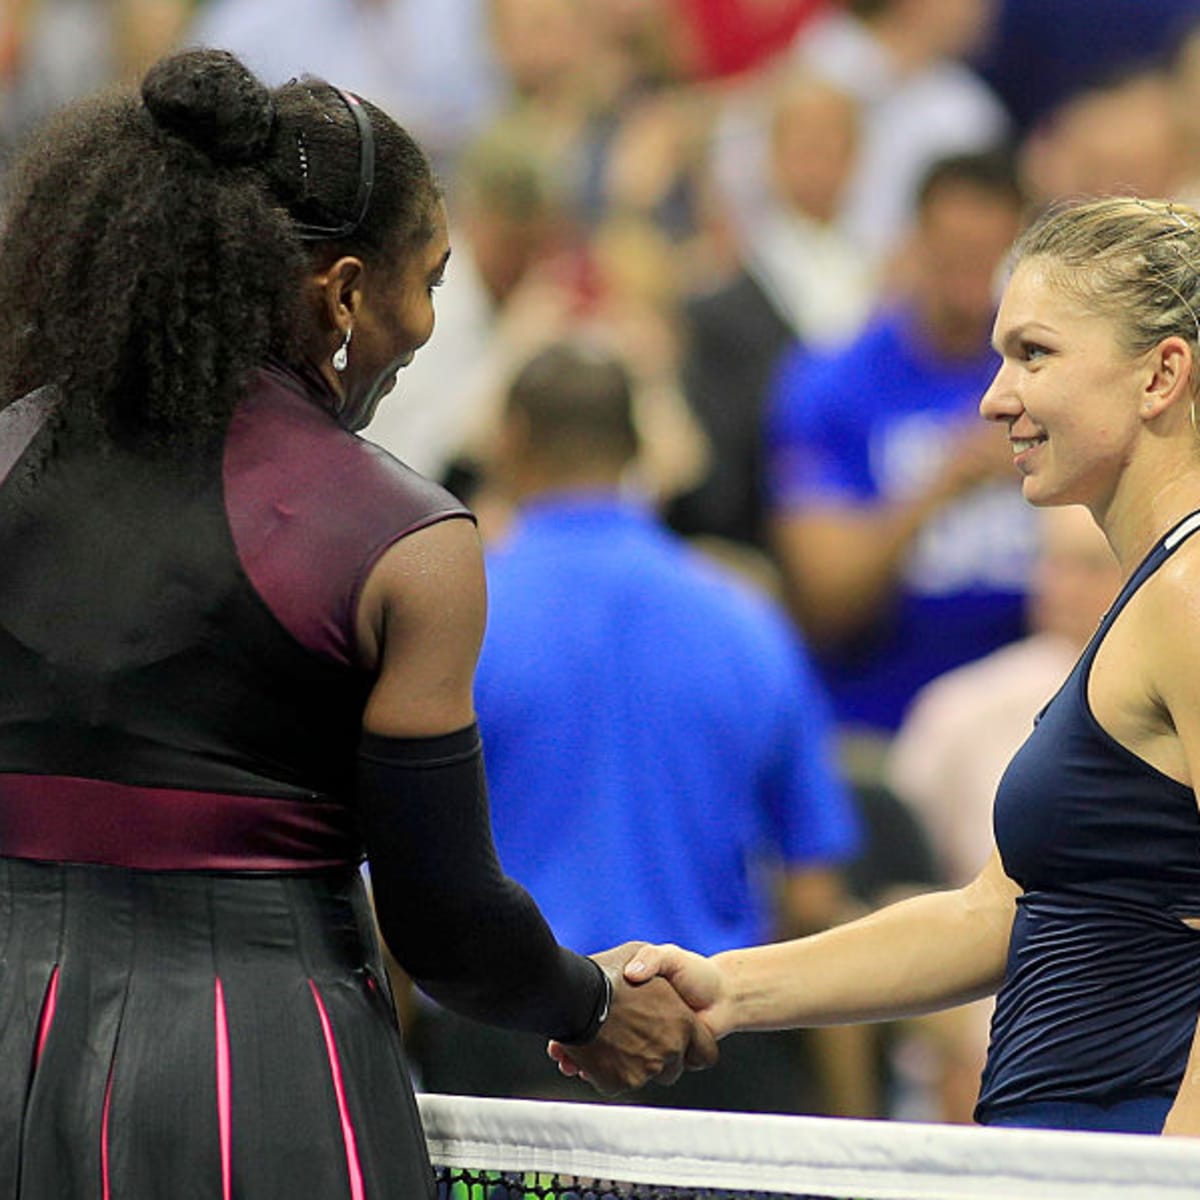 What time is Serena Williams vs Simona Halep? Australian Open live stream, TV